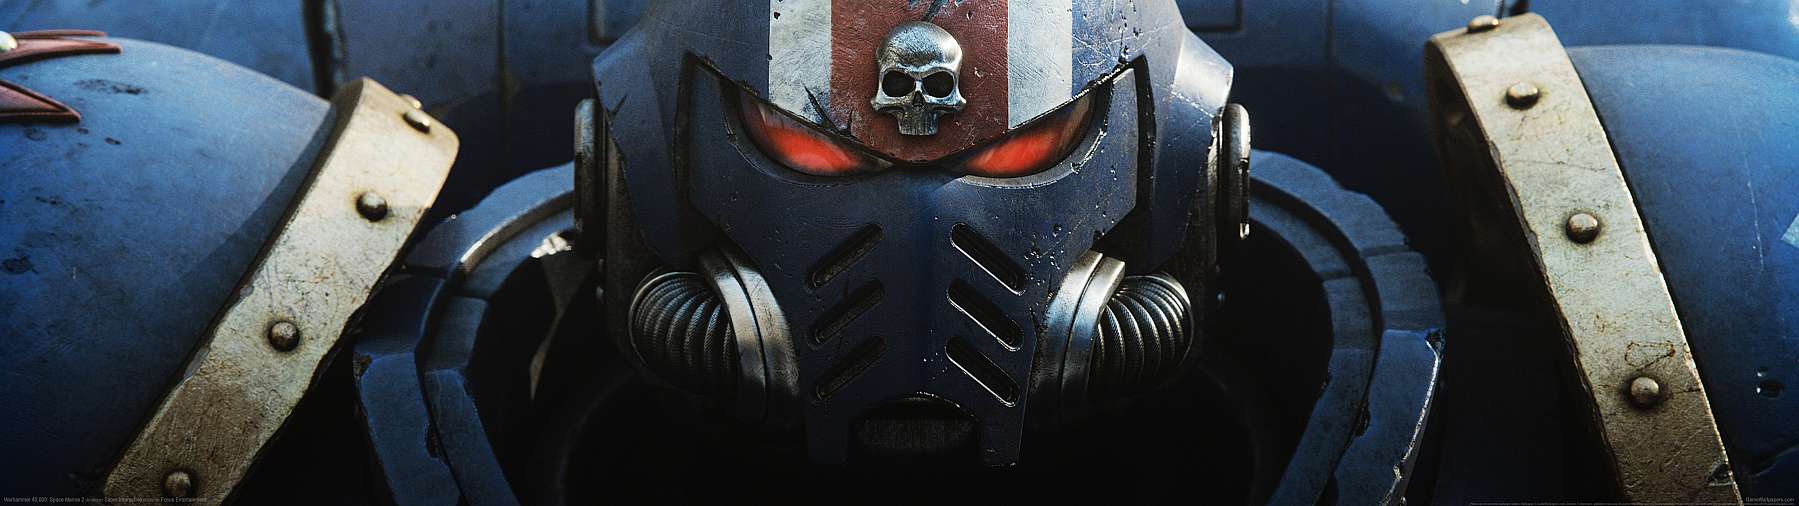 Warhammer 40,000: Space Marine 2 wallpaper or background